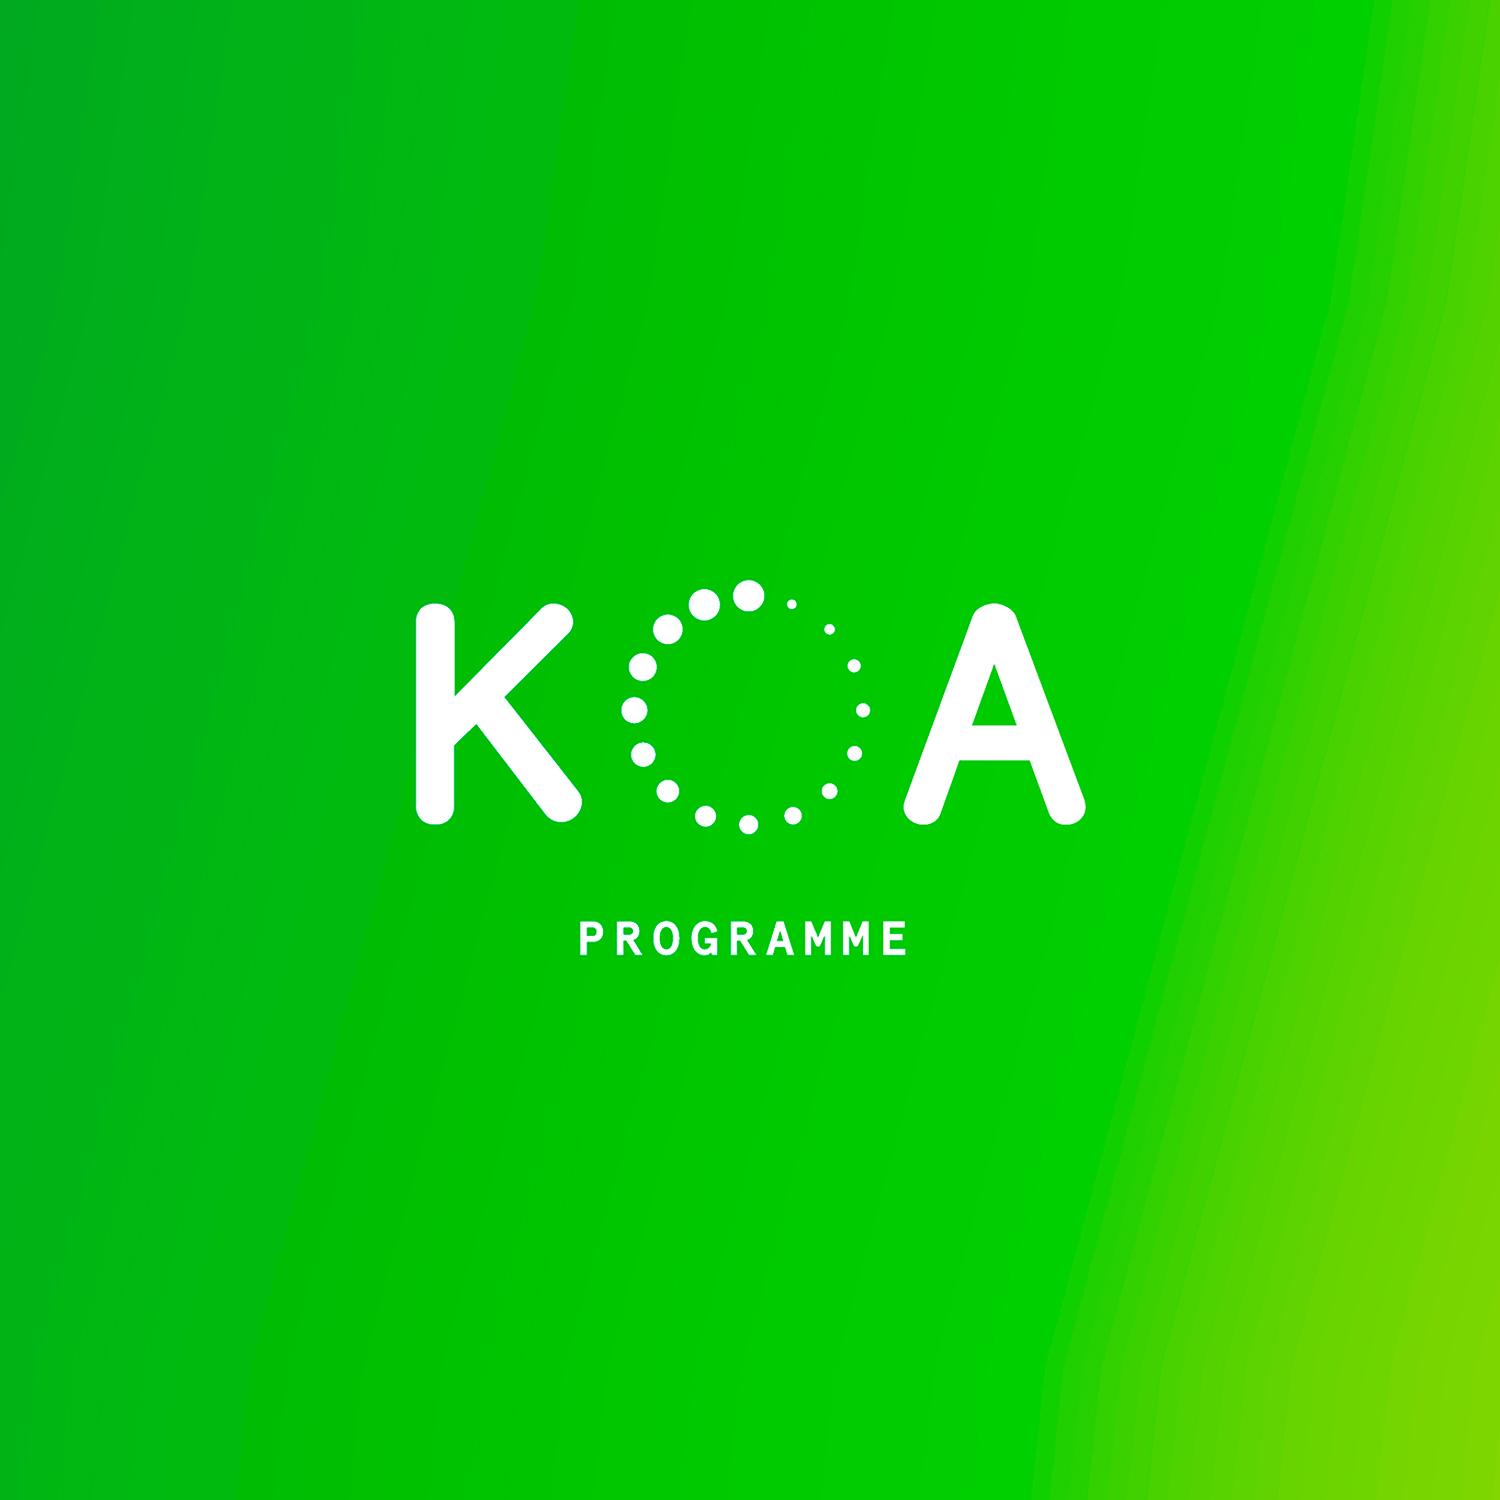 KOA Programme by Nous Cims